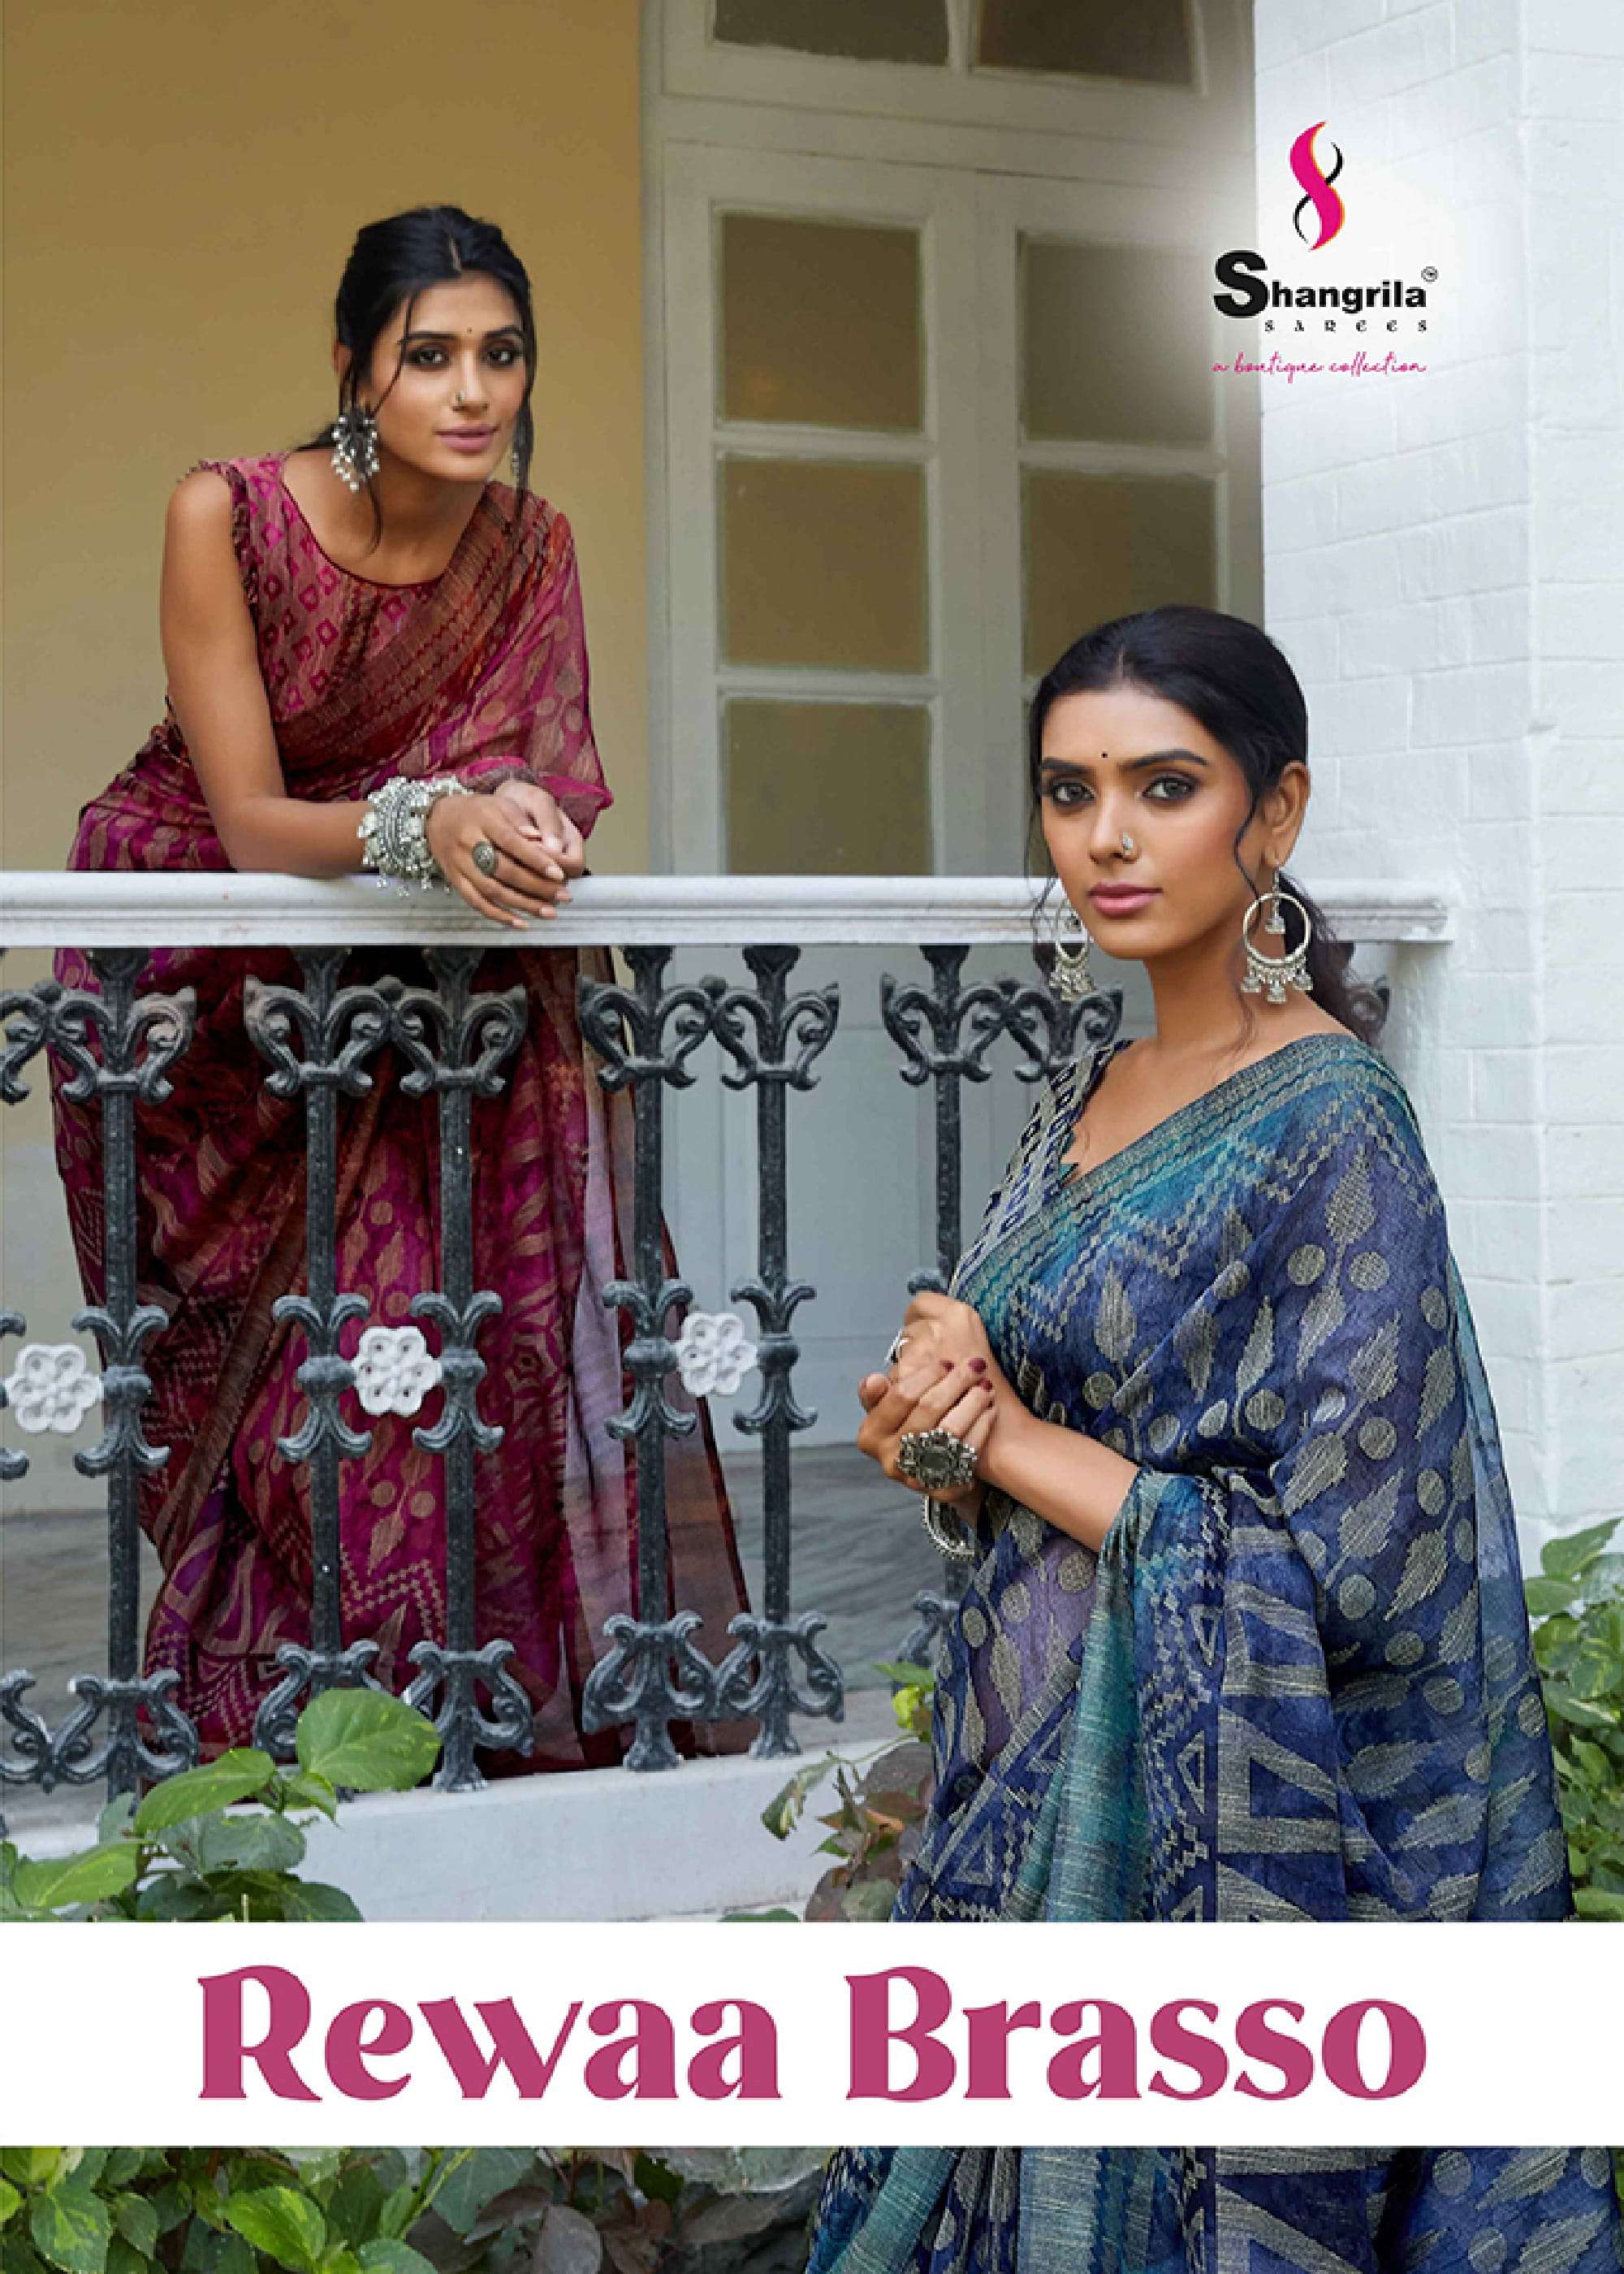 shangrila rewaa brasso range of brasso sarees with excellent color 